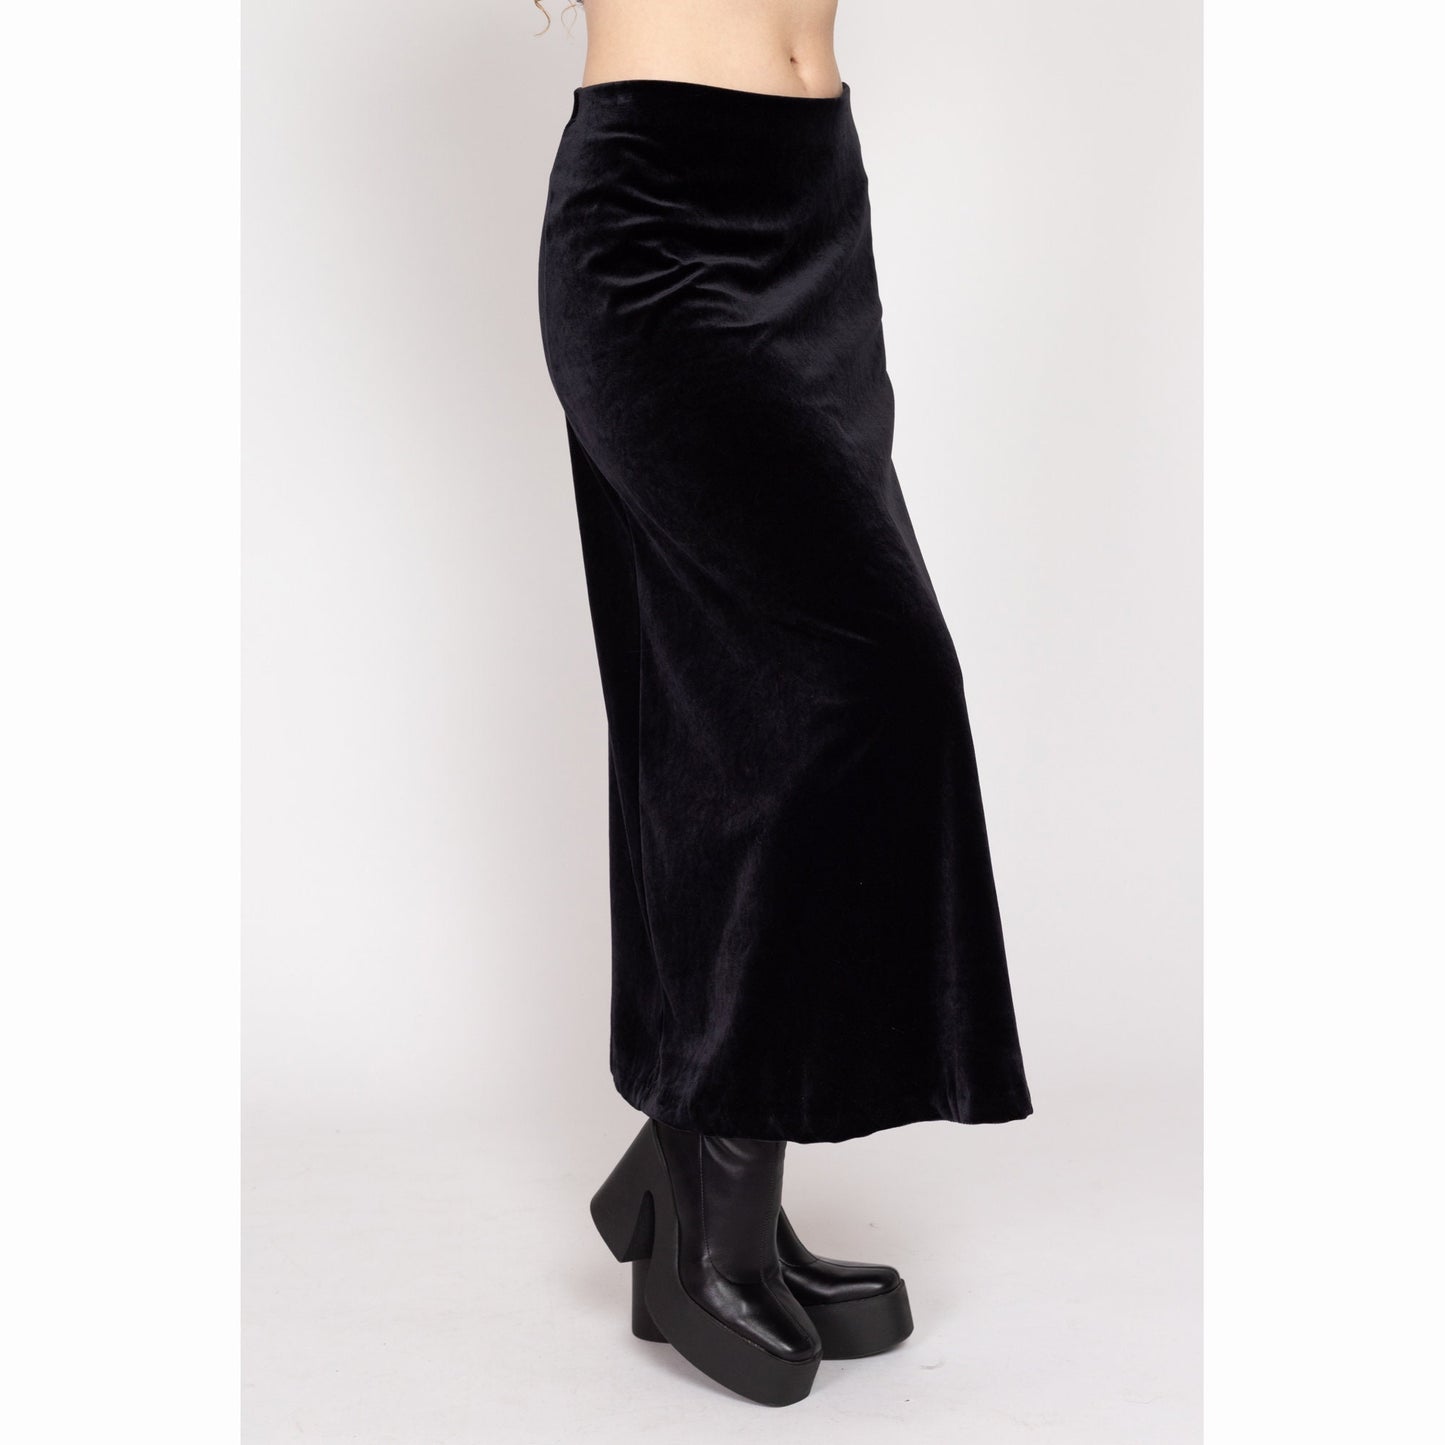 Medium 90s Minimalist Black Velvet Maxi Skirt | Vintage High Waisted Gothic Grunge A Line Skirt